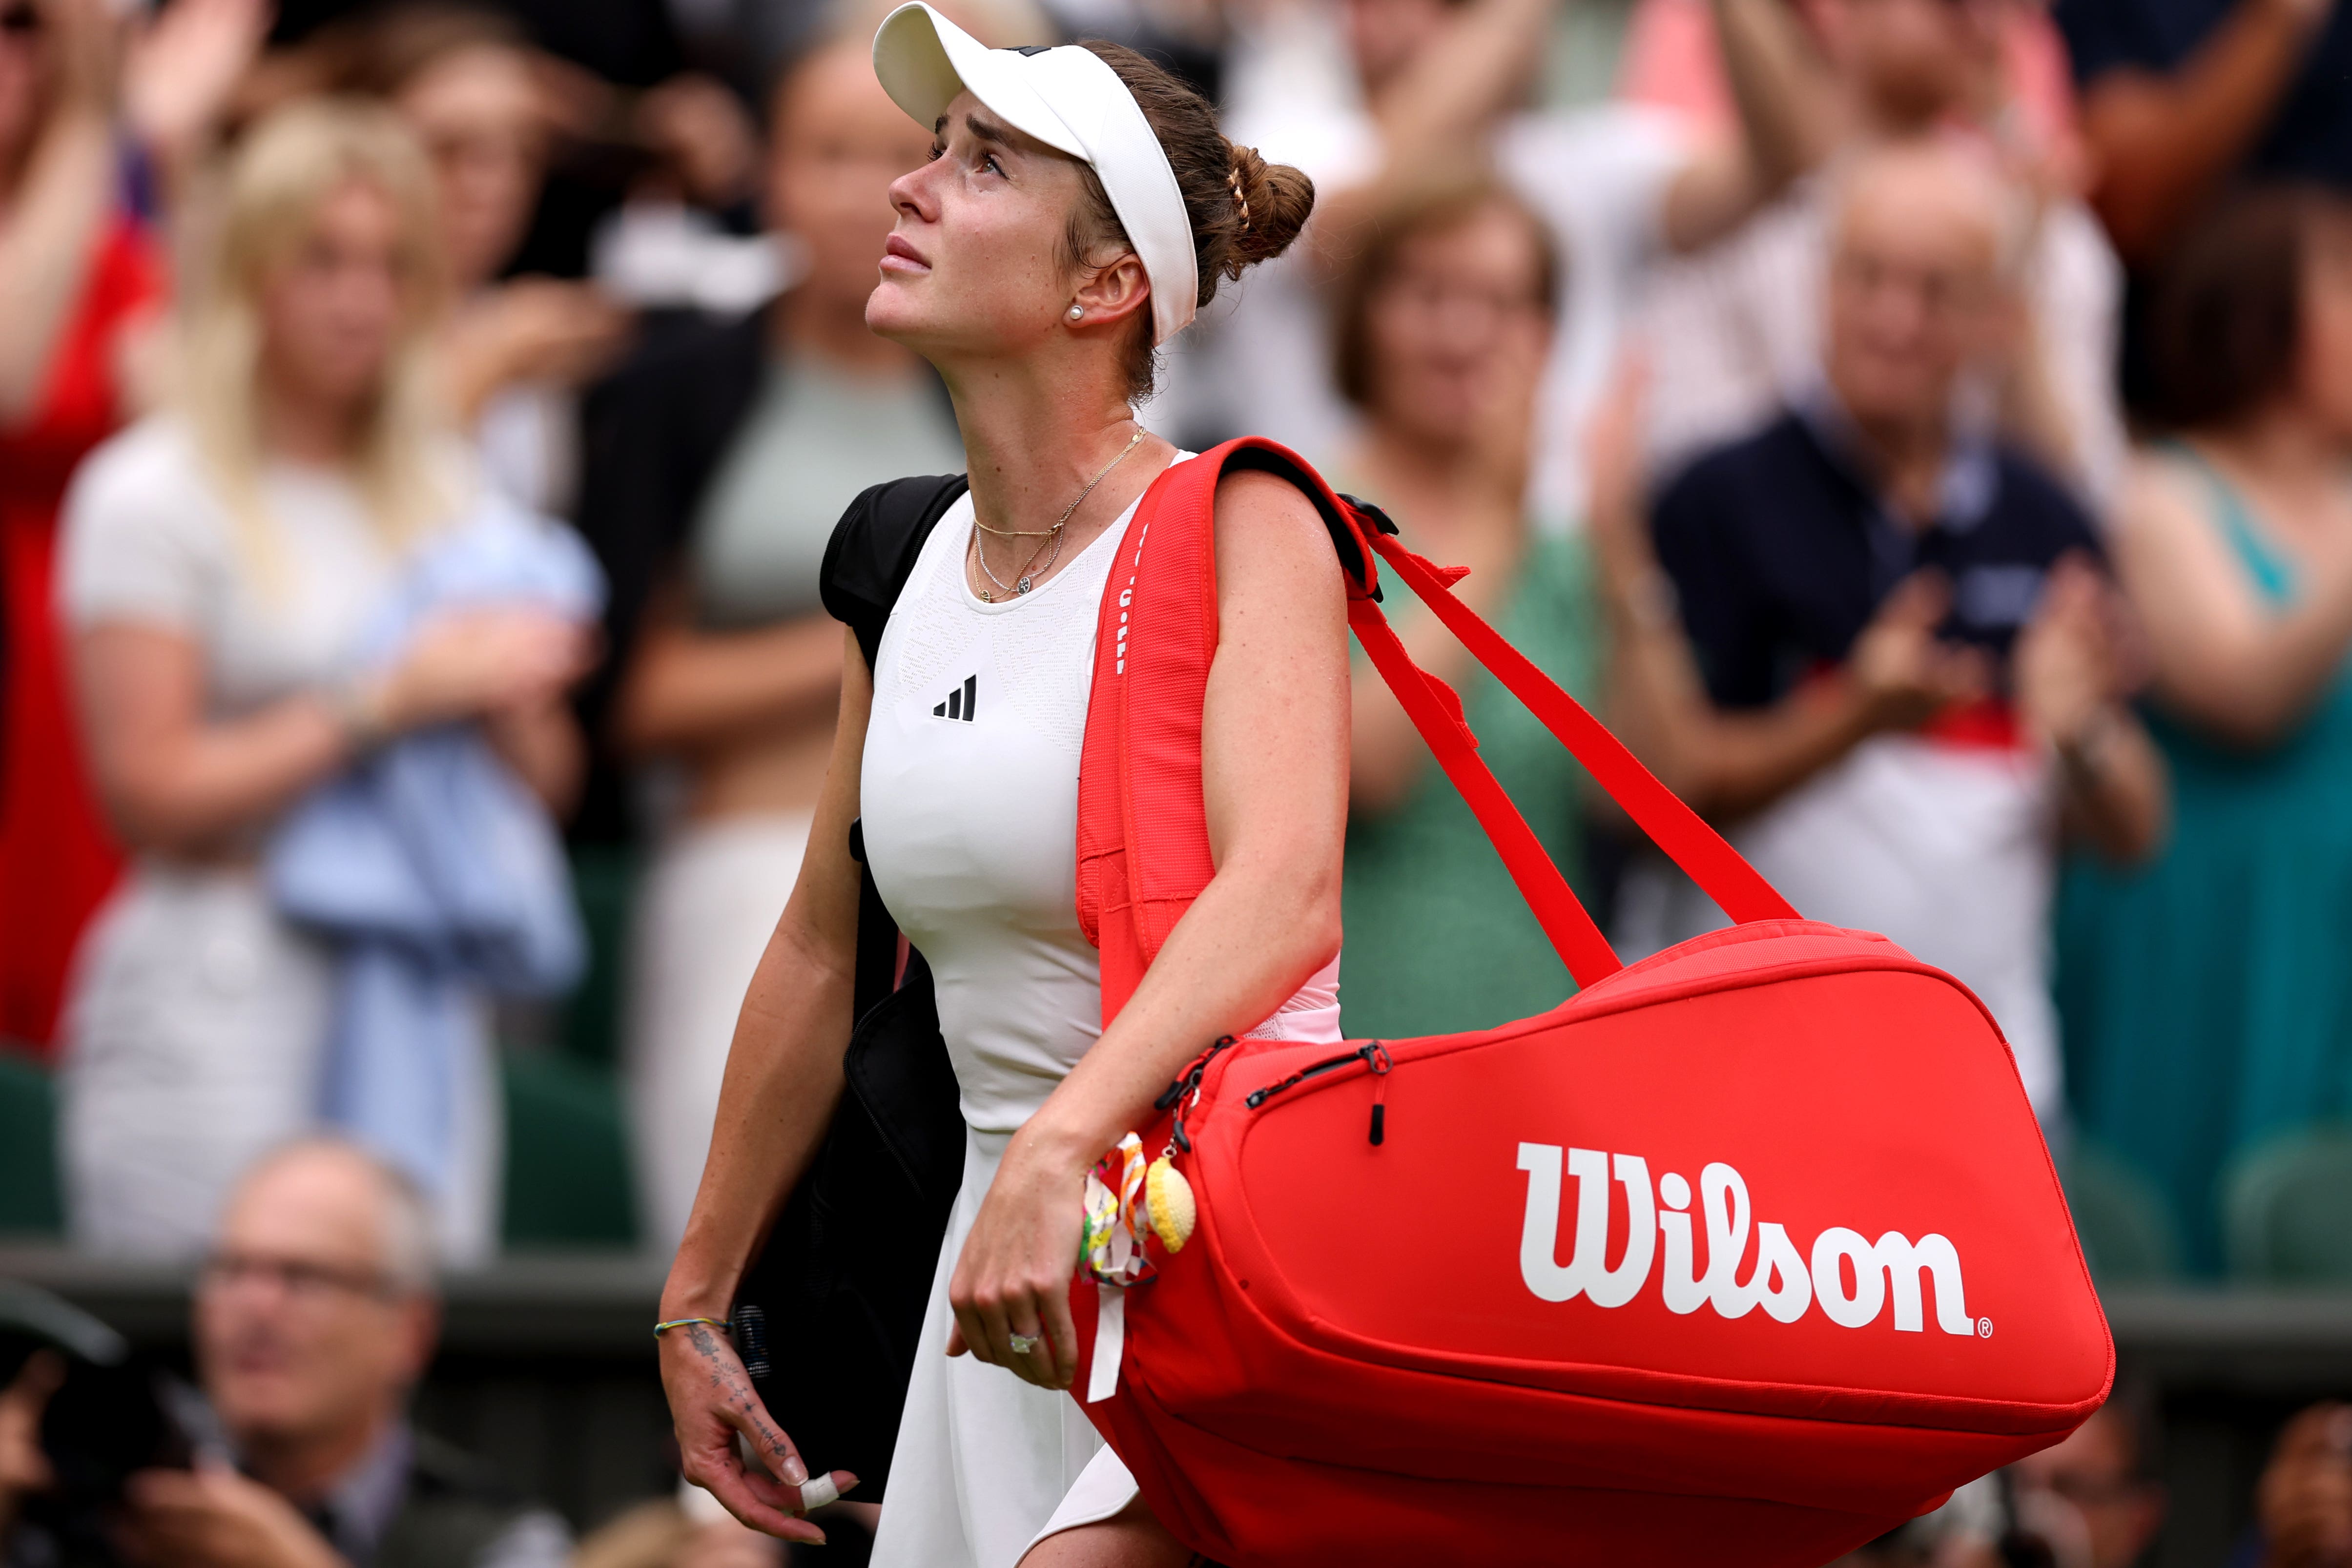 Tearful Elina Svitolina exits Wimbledon after inspiring run ends in semi-finals The Independent